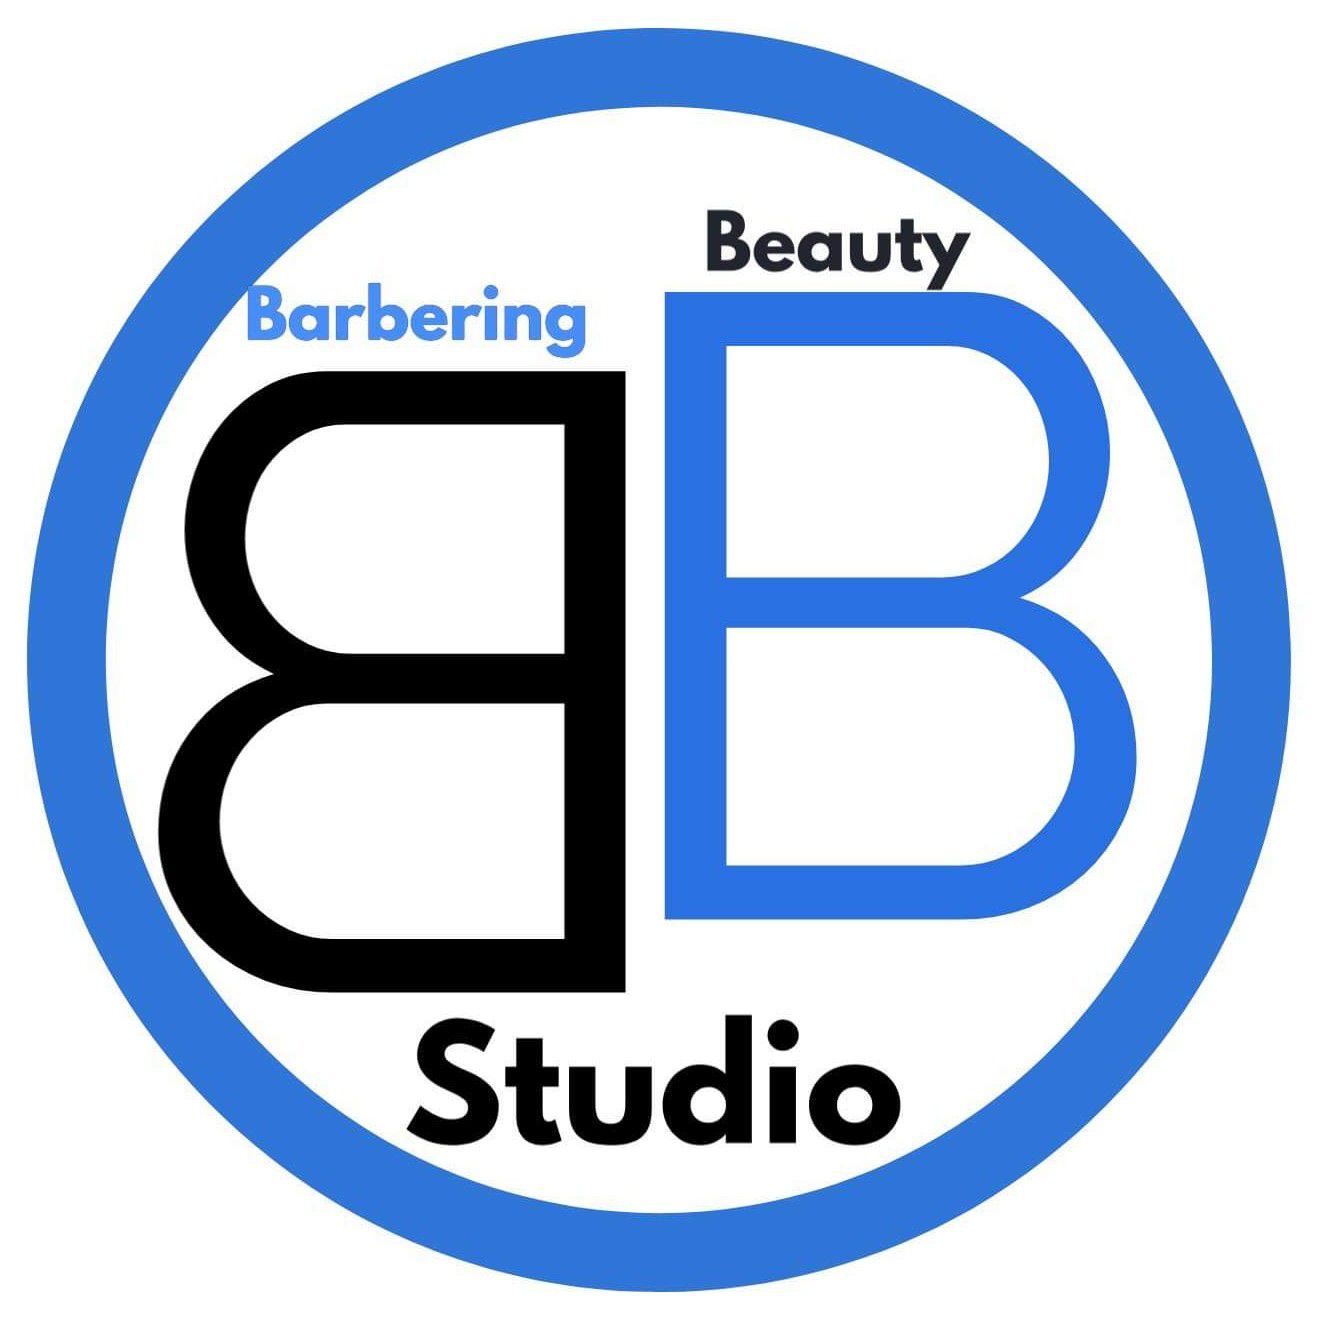 Barbering Beauty Studio (Colorado Springs), 2230 B St, Suit 200- Far Right Parking Lot, Colorado Springs, 80906